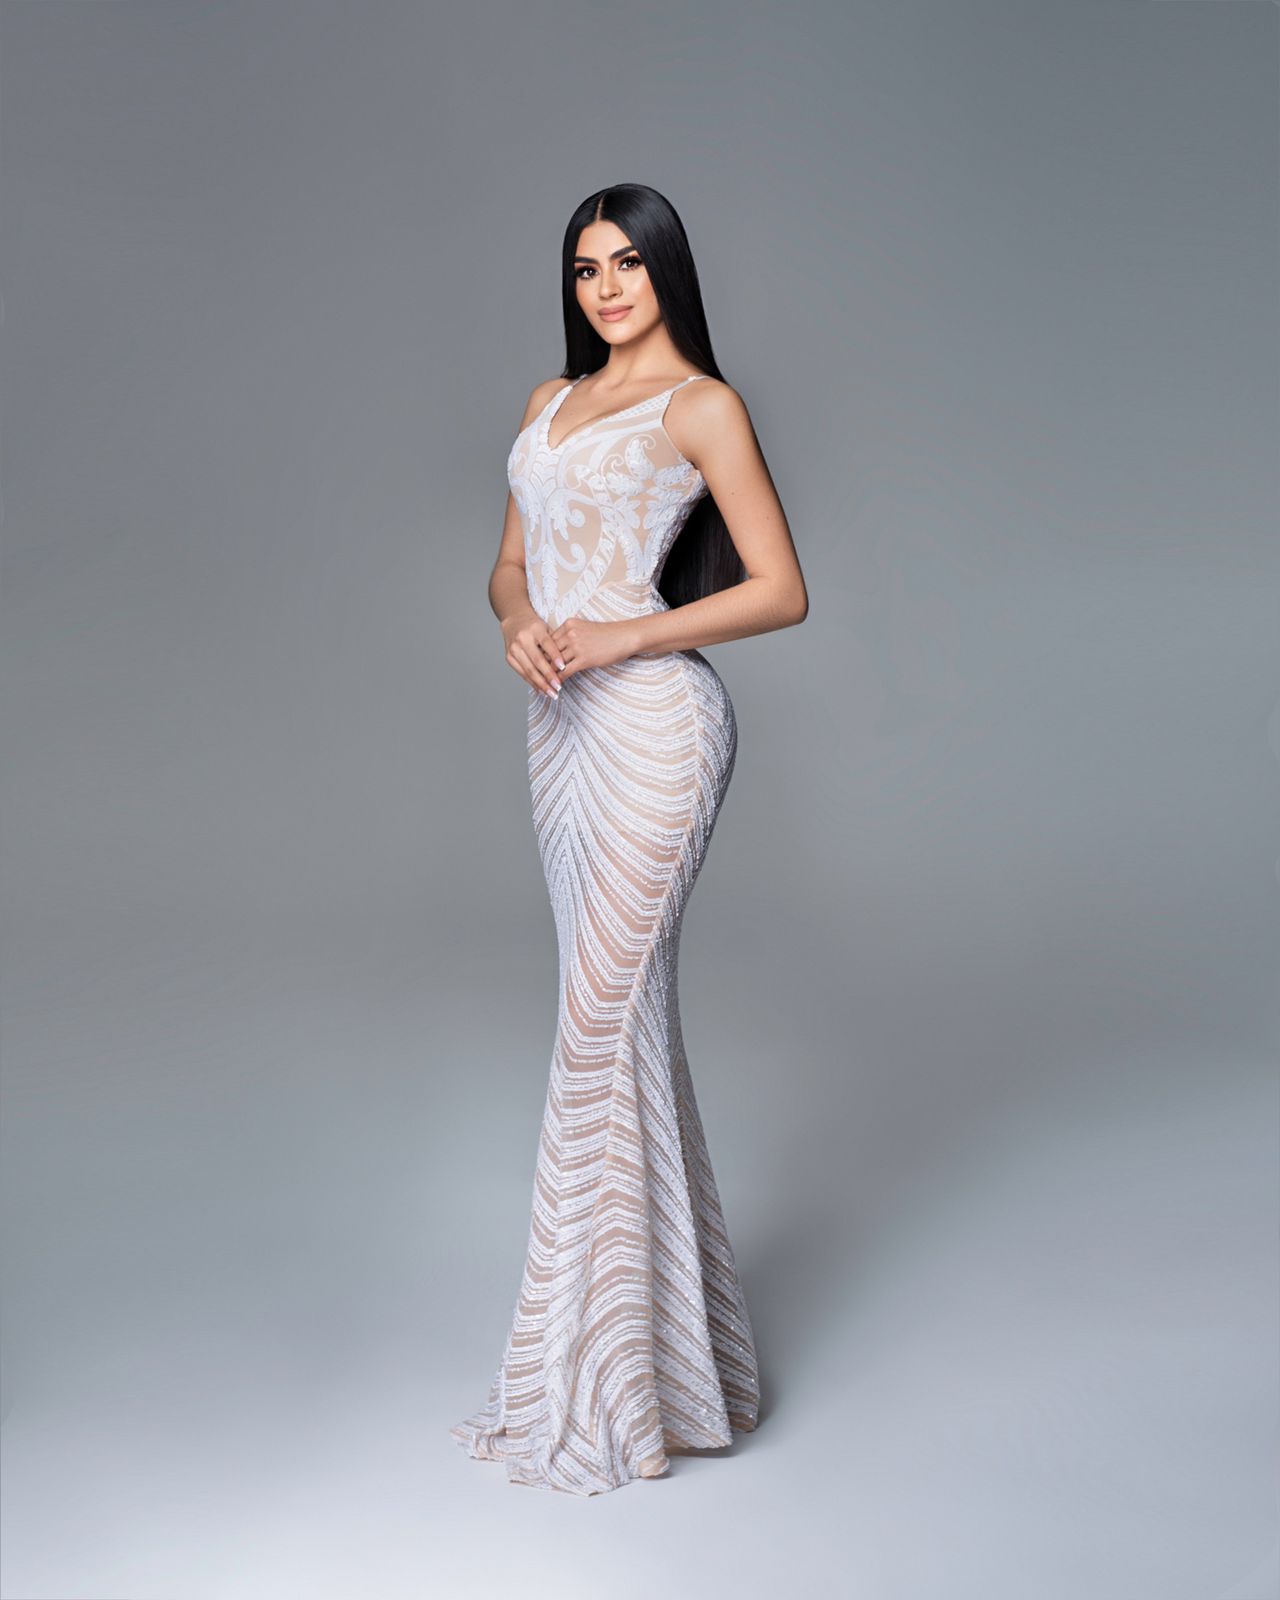 Valeria Giraldo Toro representará a Medellín en Miss Universe Colombia